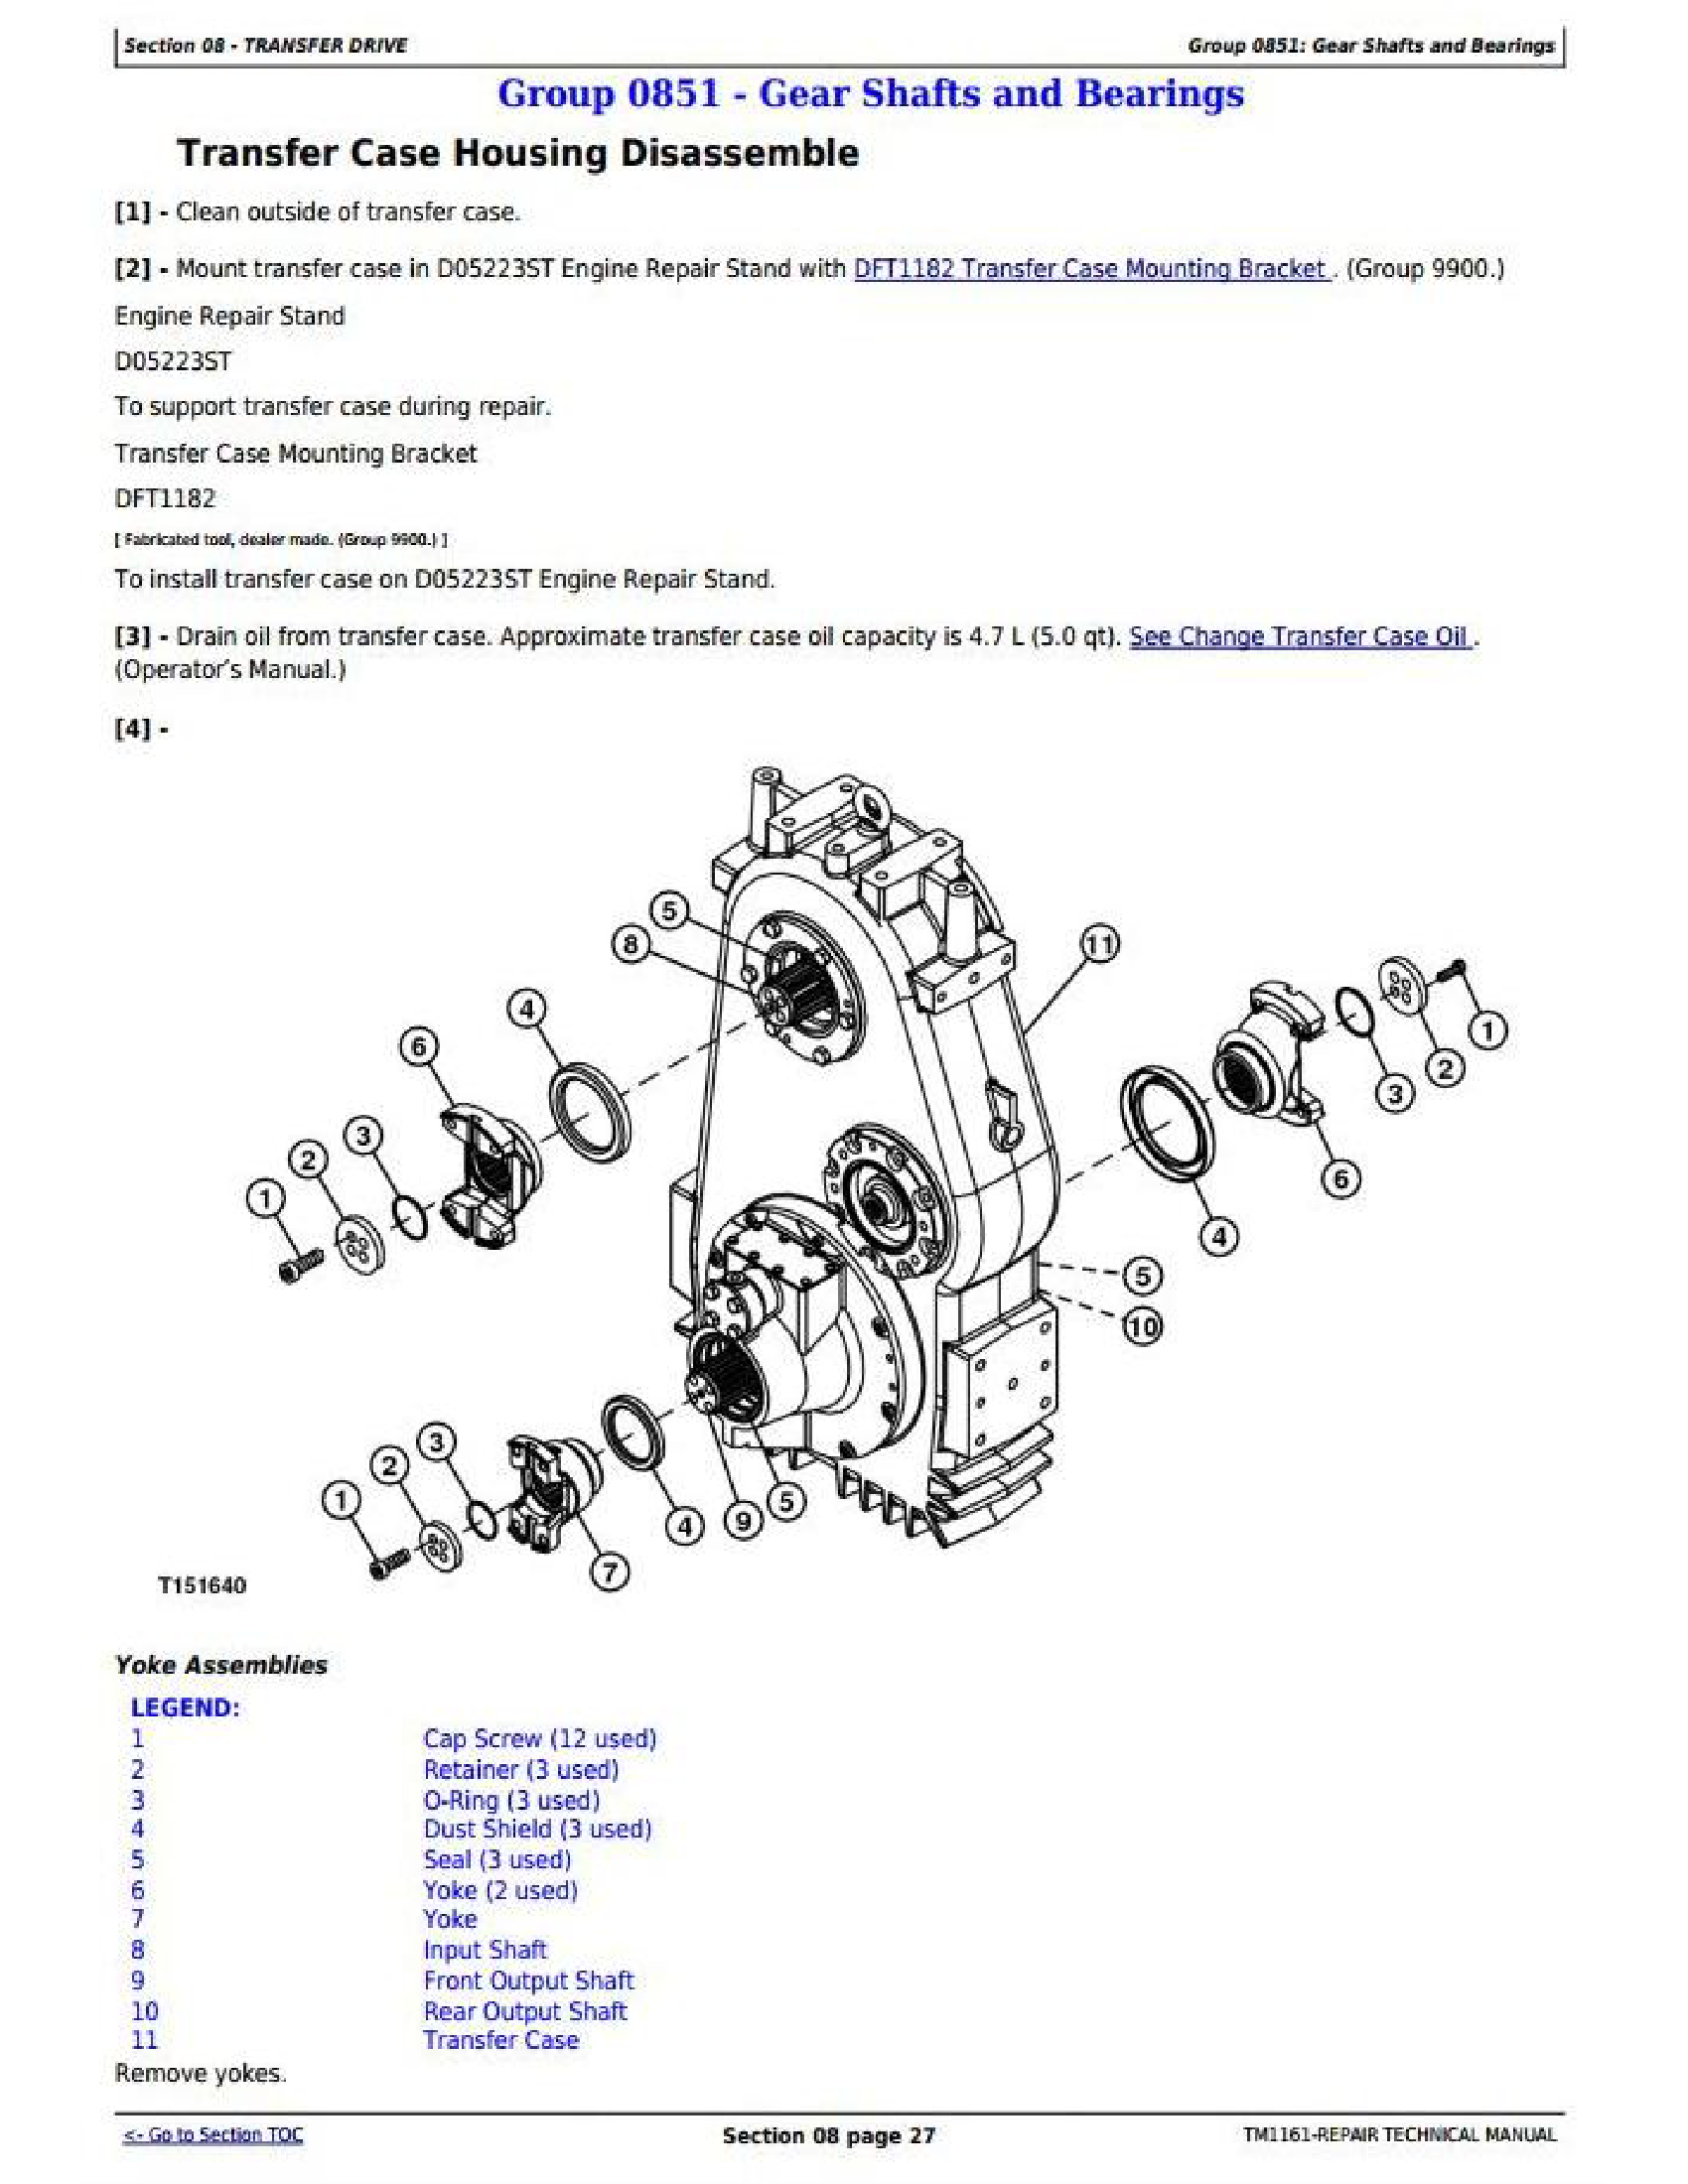 John Deere 1DW624K manual pdf